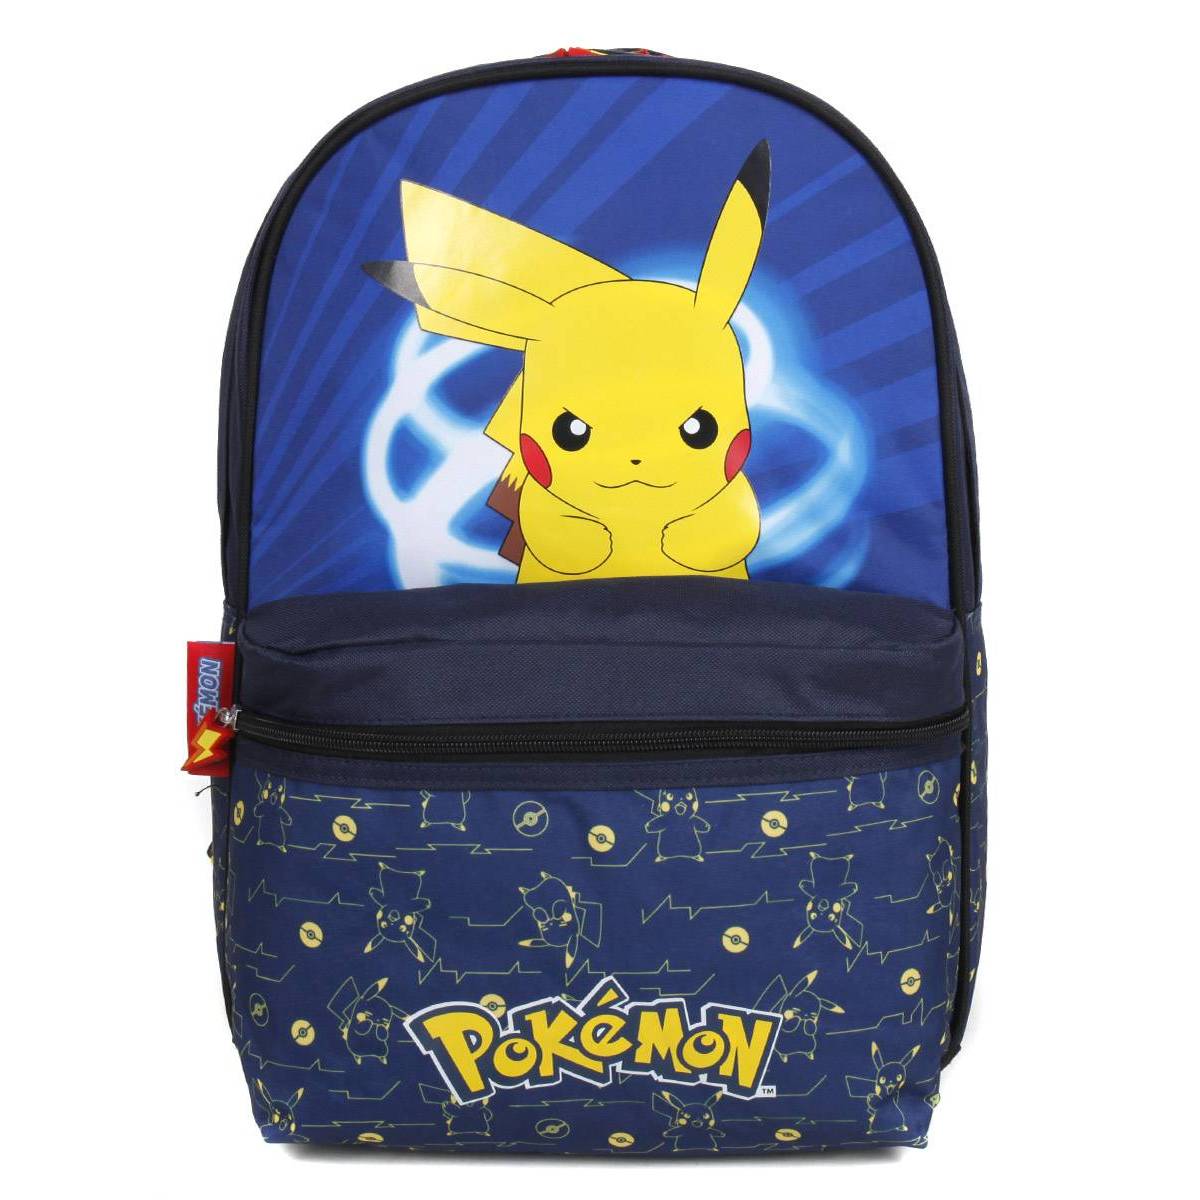 Pokemon sac a Dos noctali cartable pikachu enfant maternelle